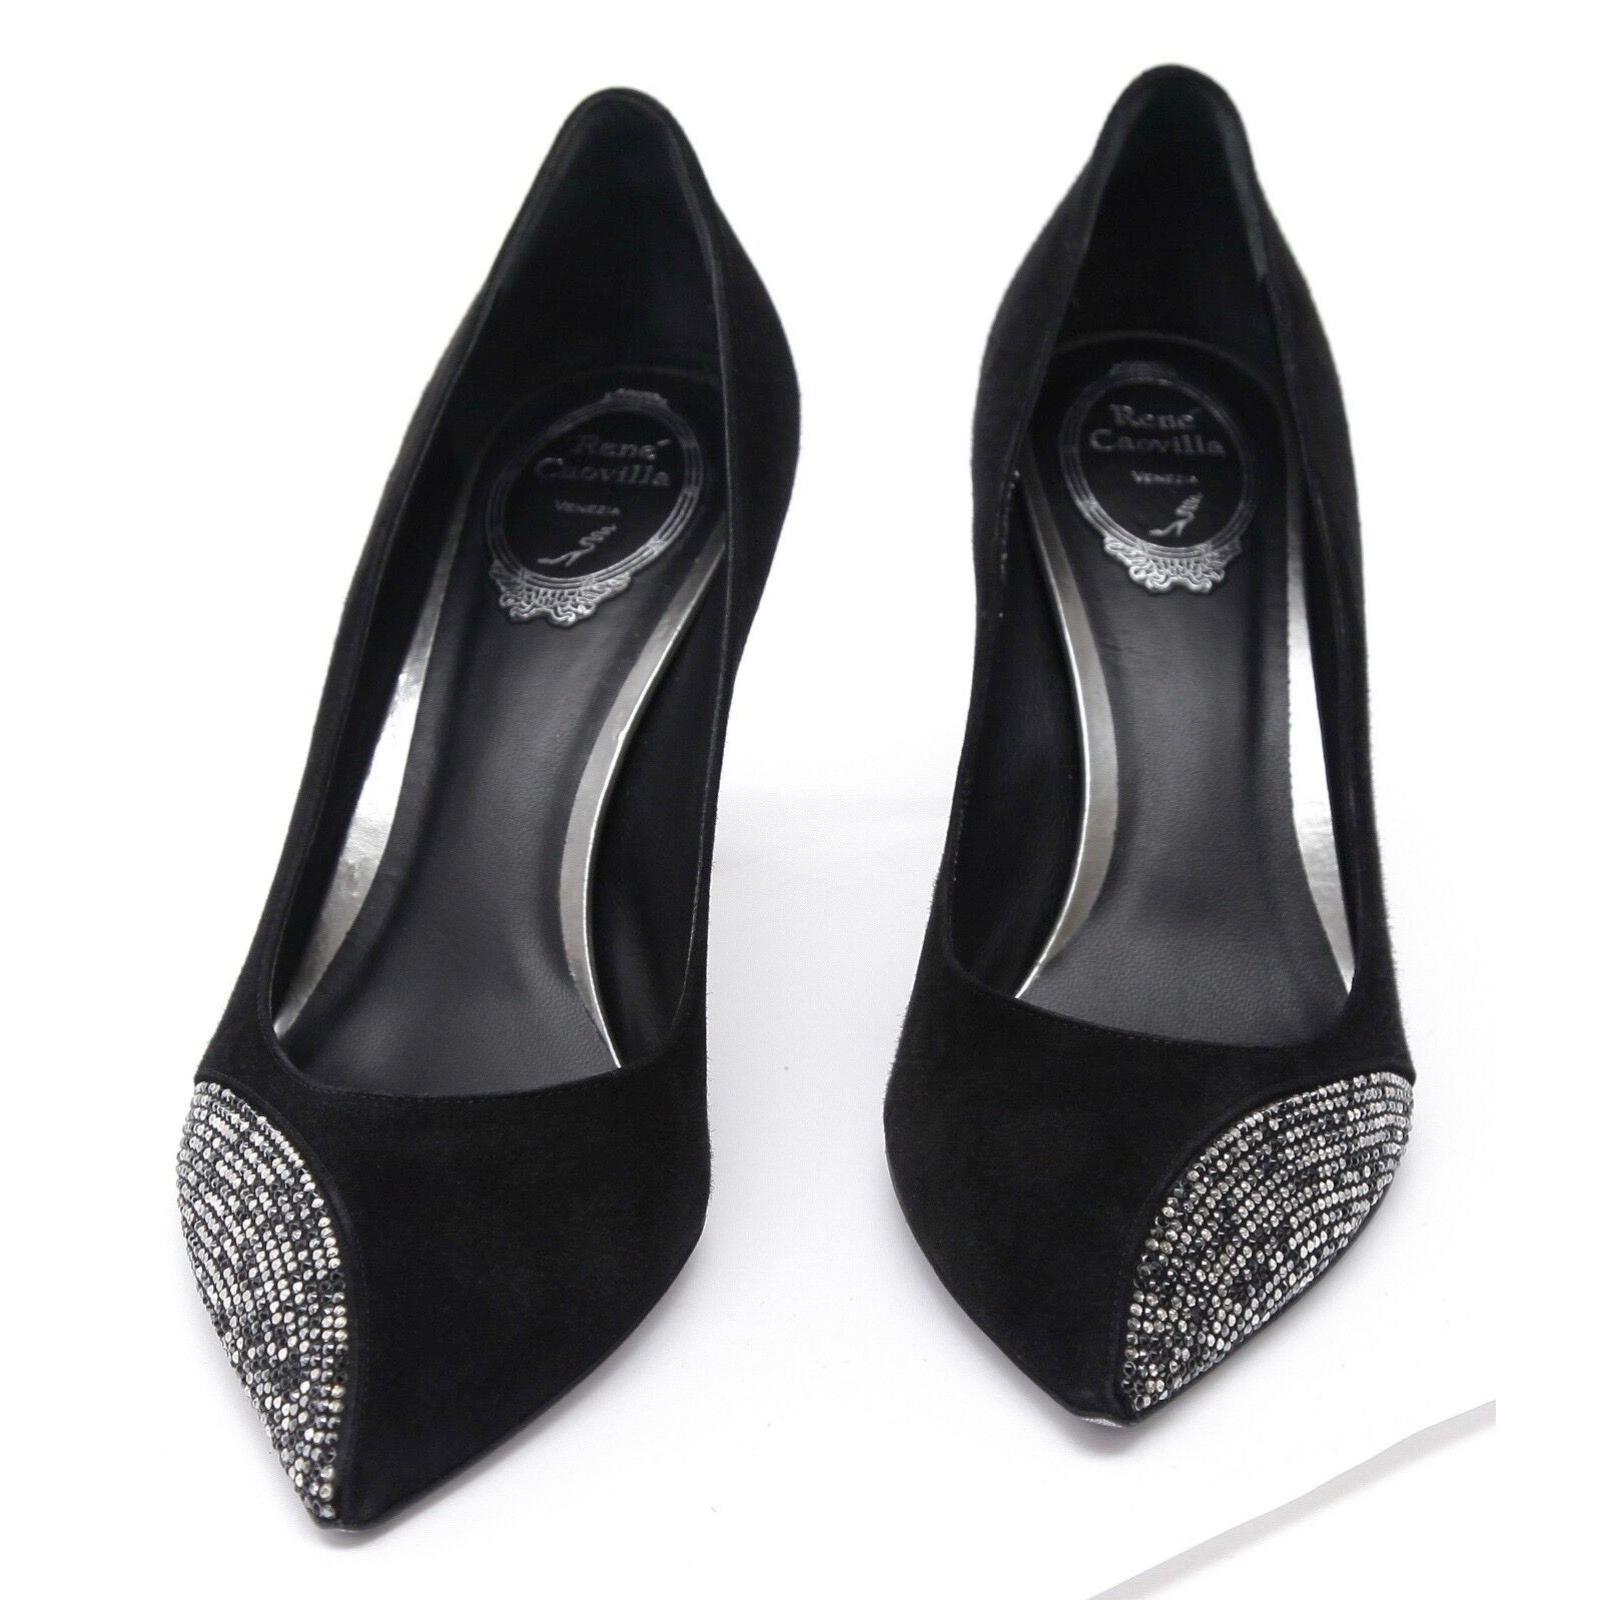 RENE CAOVILLA Pumps Black Suede Crystal Pointed Toe Heel Sz 40 For Sale 2